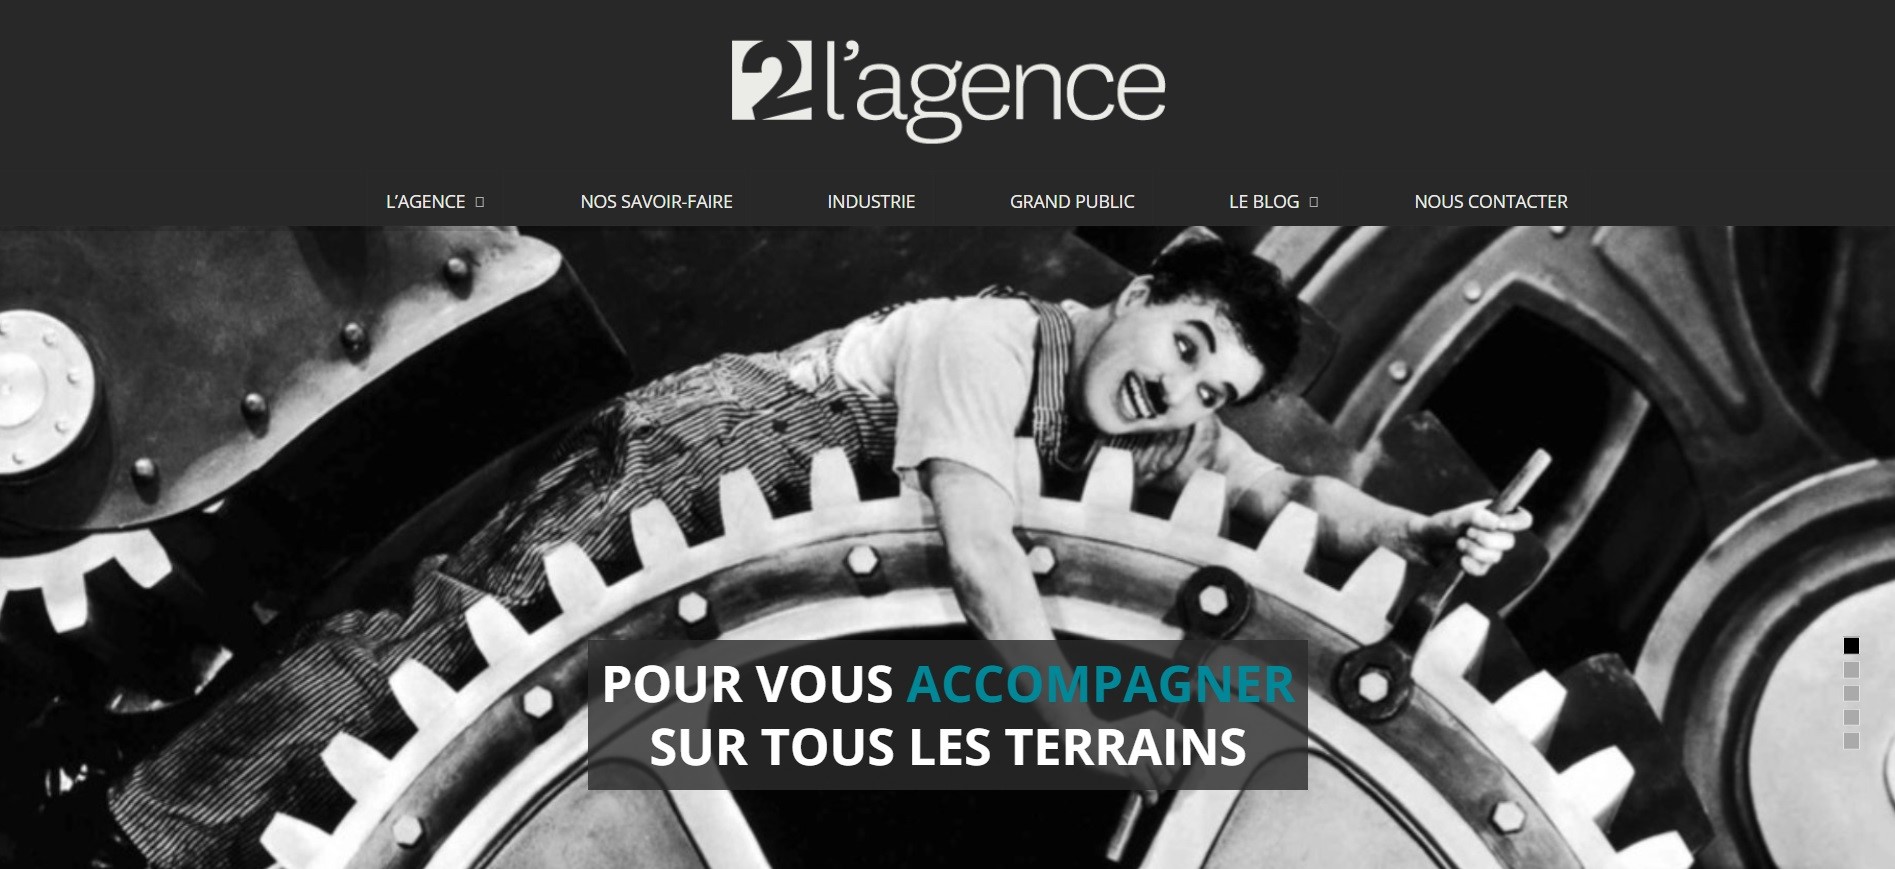  L’AGENCE agence conseil en communication industrielle, média, web & marketing - Agence Web à Chambéry